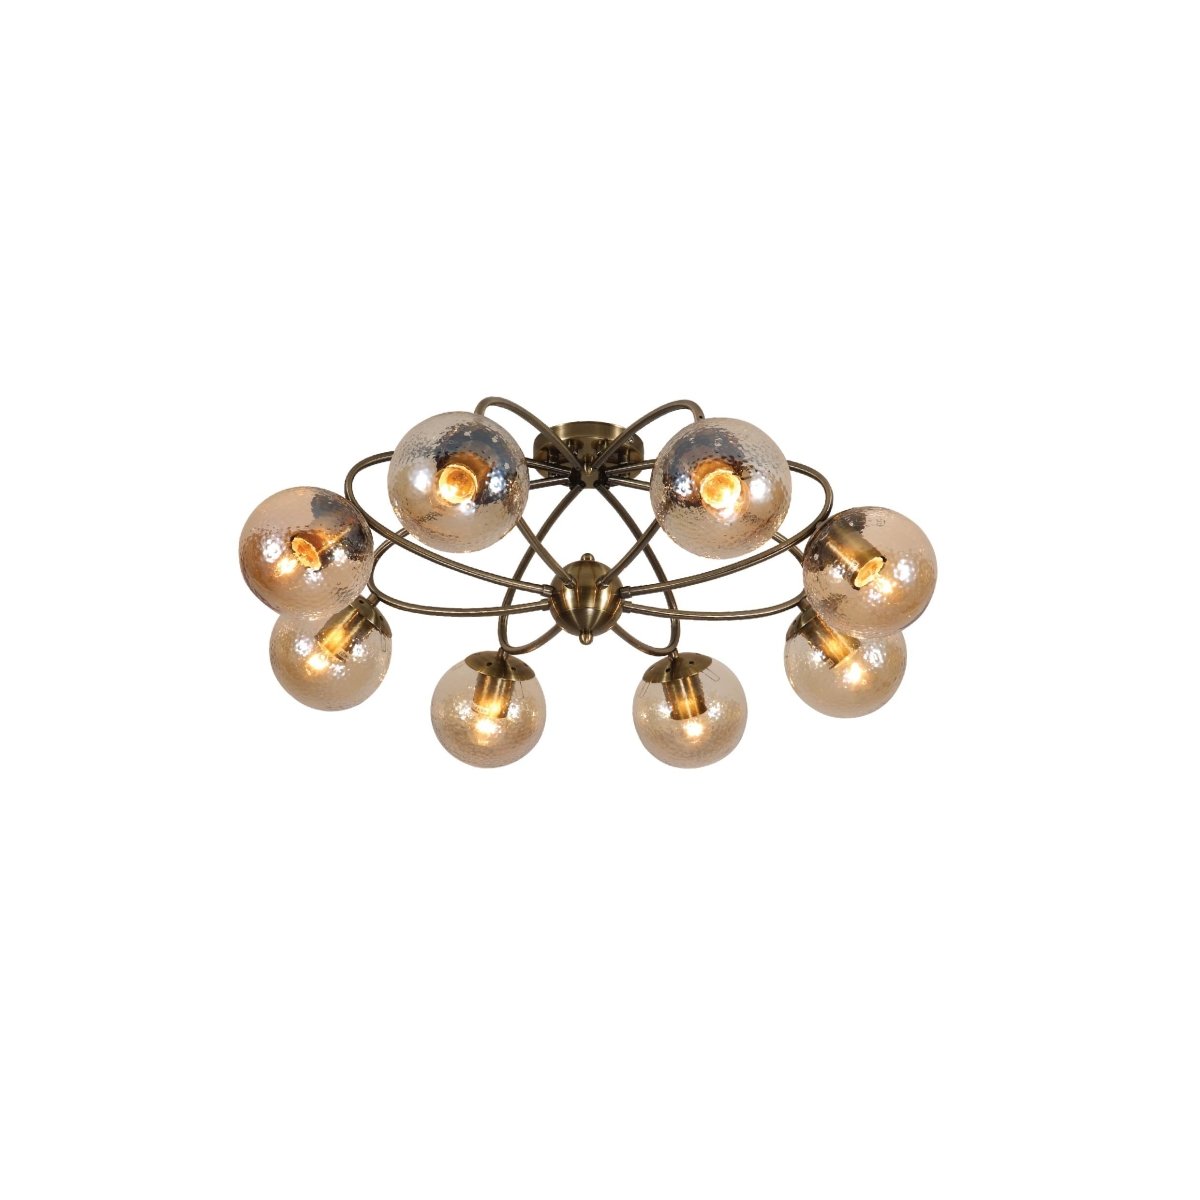 Main image of Textured Amber Globe Antique Brass Semi Circle Arm Semi Flush Ceiling Light | TEKLED 159-17760